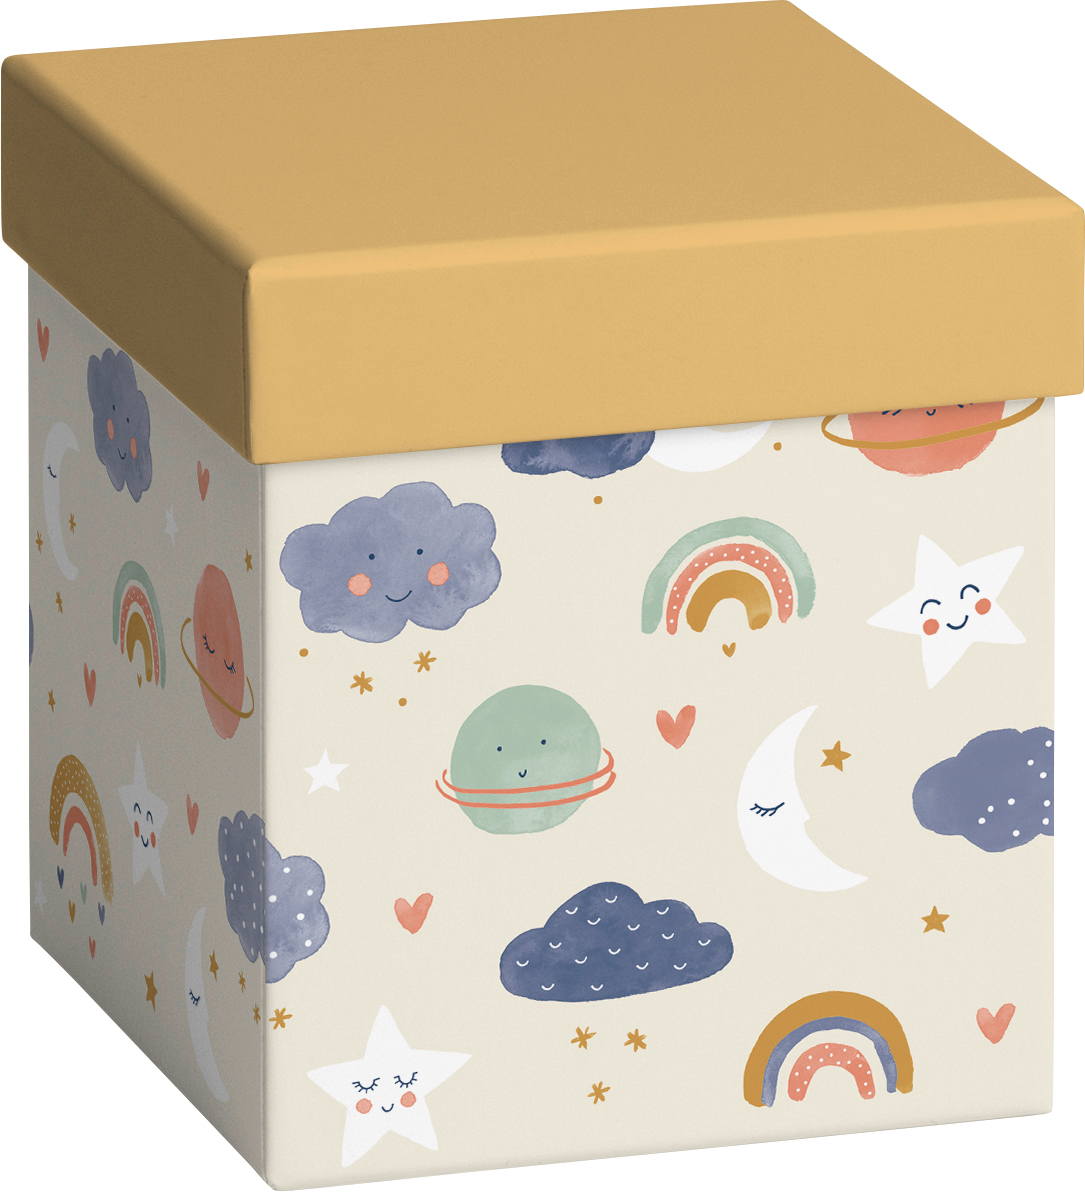 STEWO Box cadeau Hiroko 2551547296 beige 11x11x12cm beige 11x11x12cm